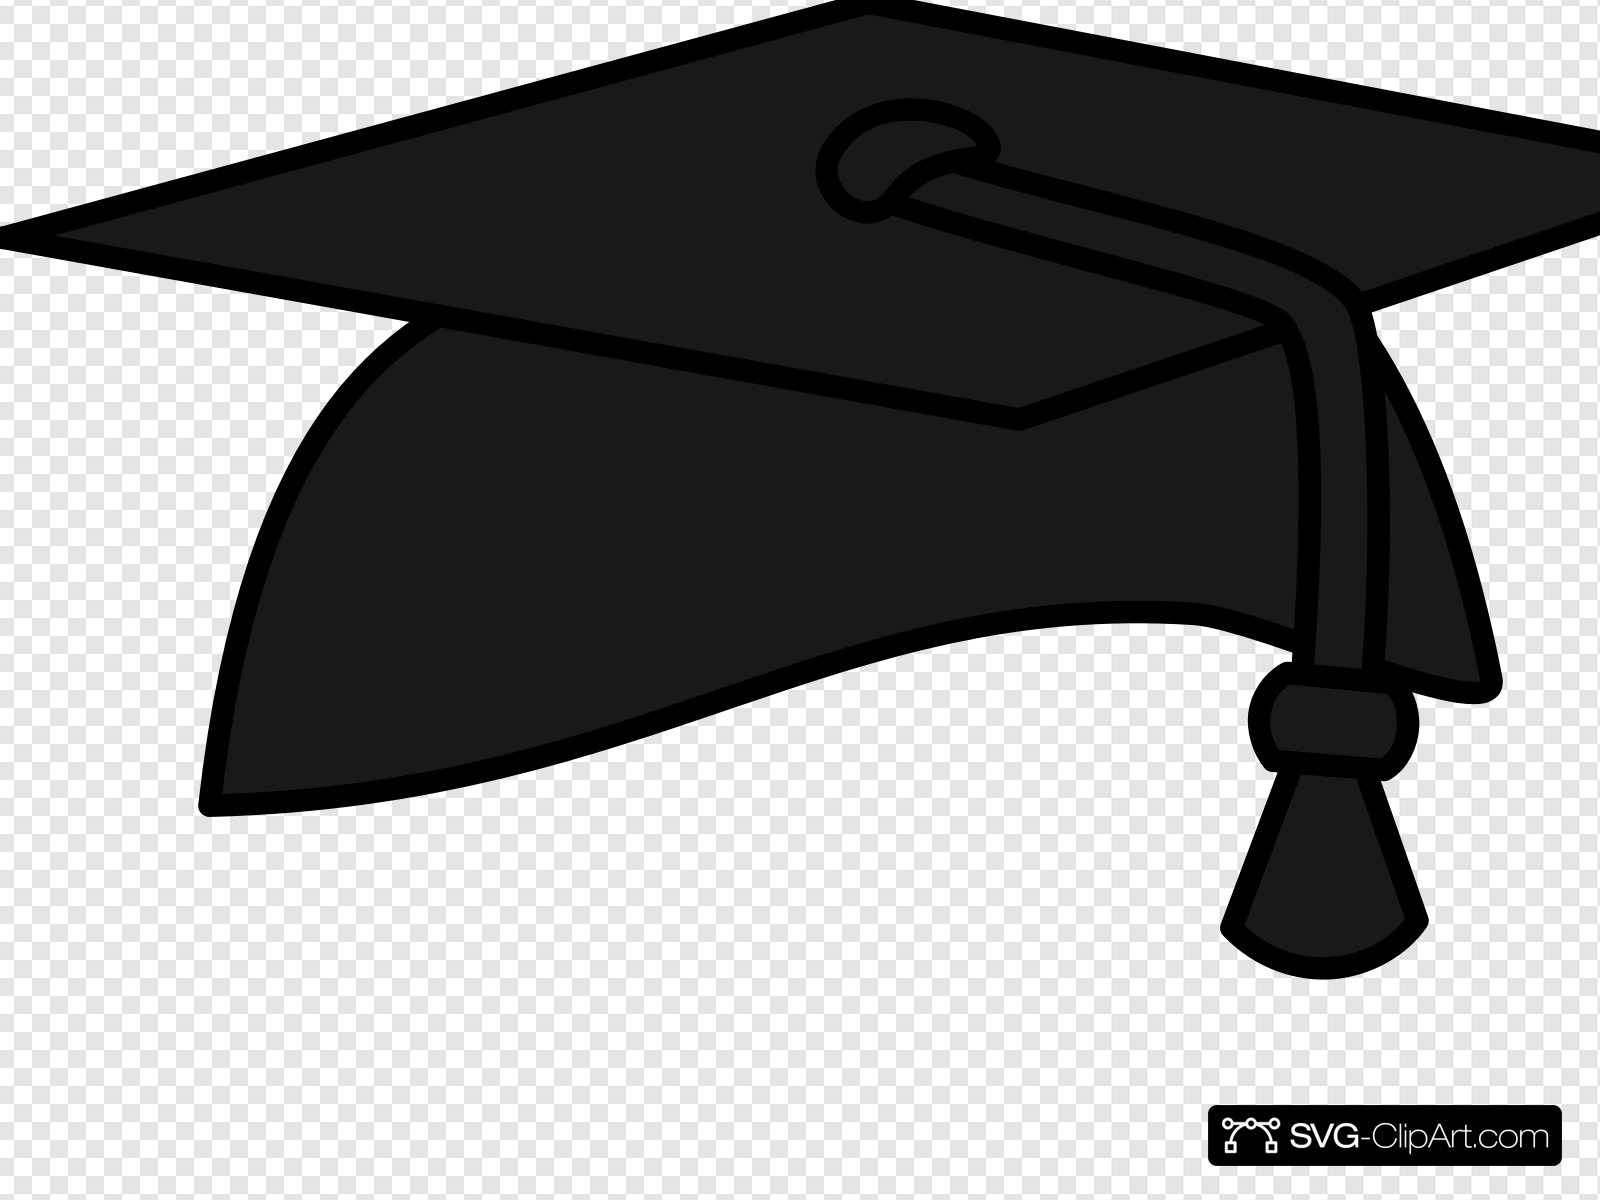 Graduation Cap Clip art, Icon and SVG